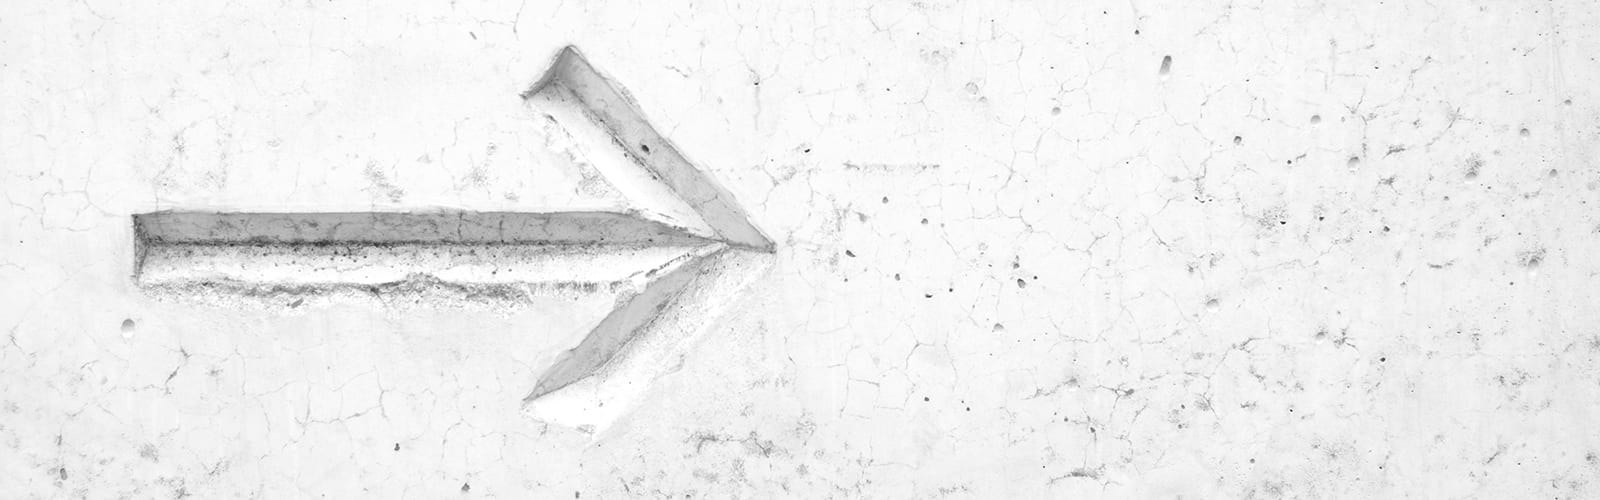 arrow embossed in white stone